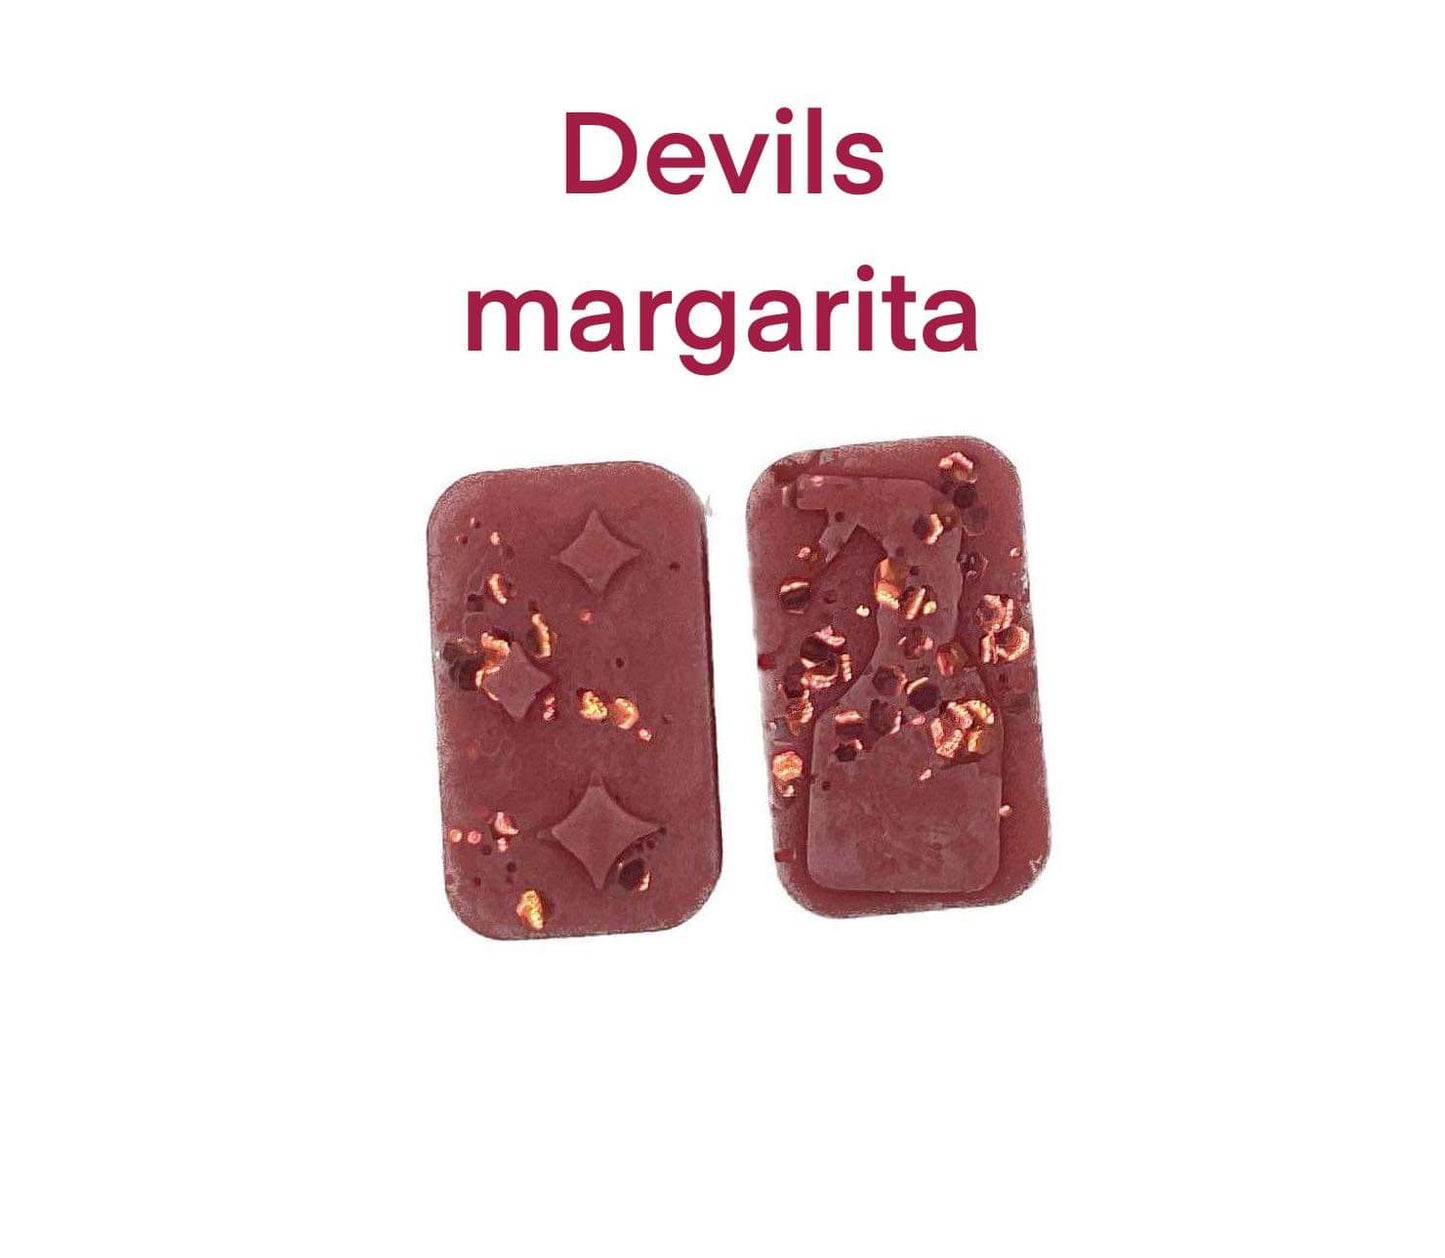 Devils margarita shapes